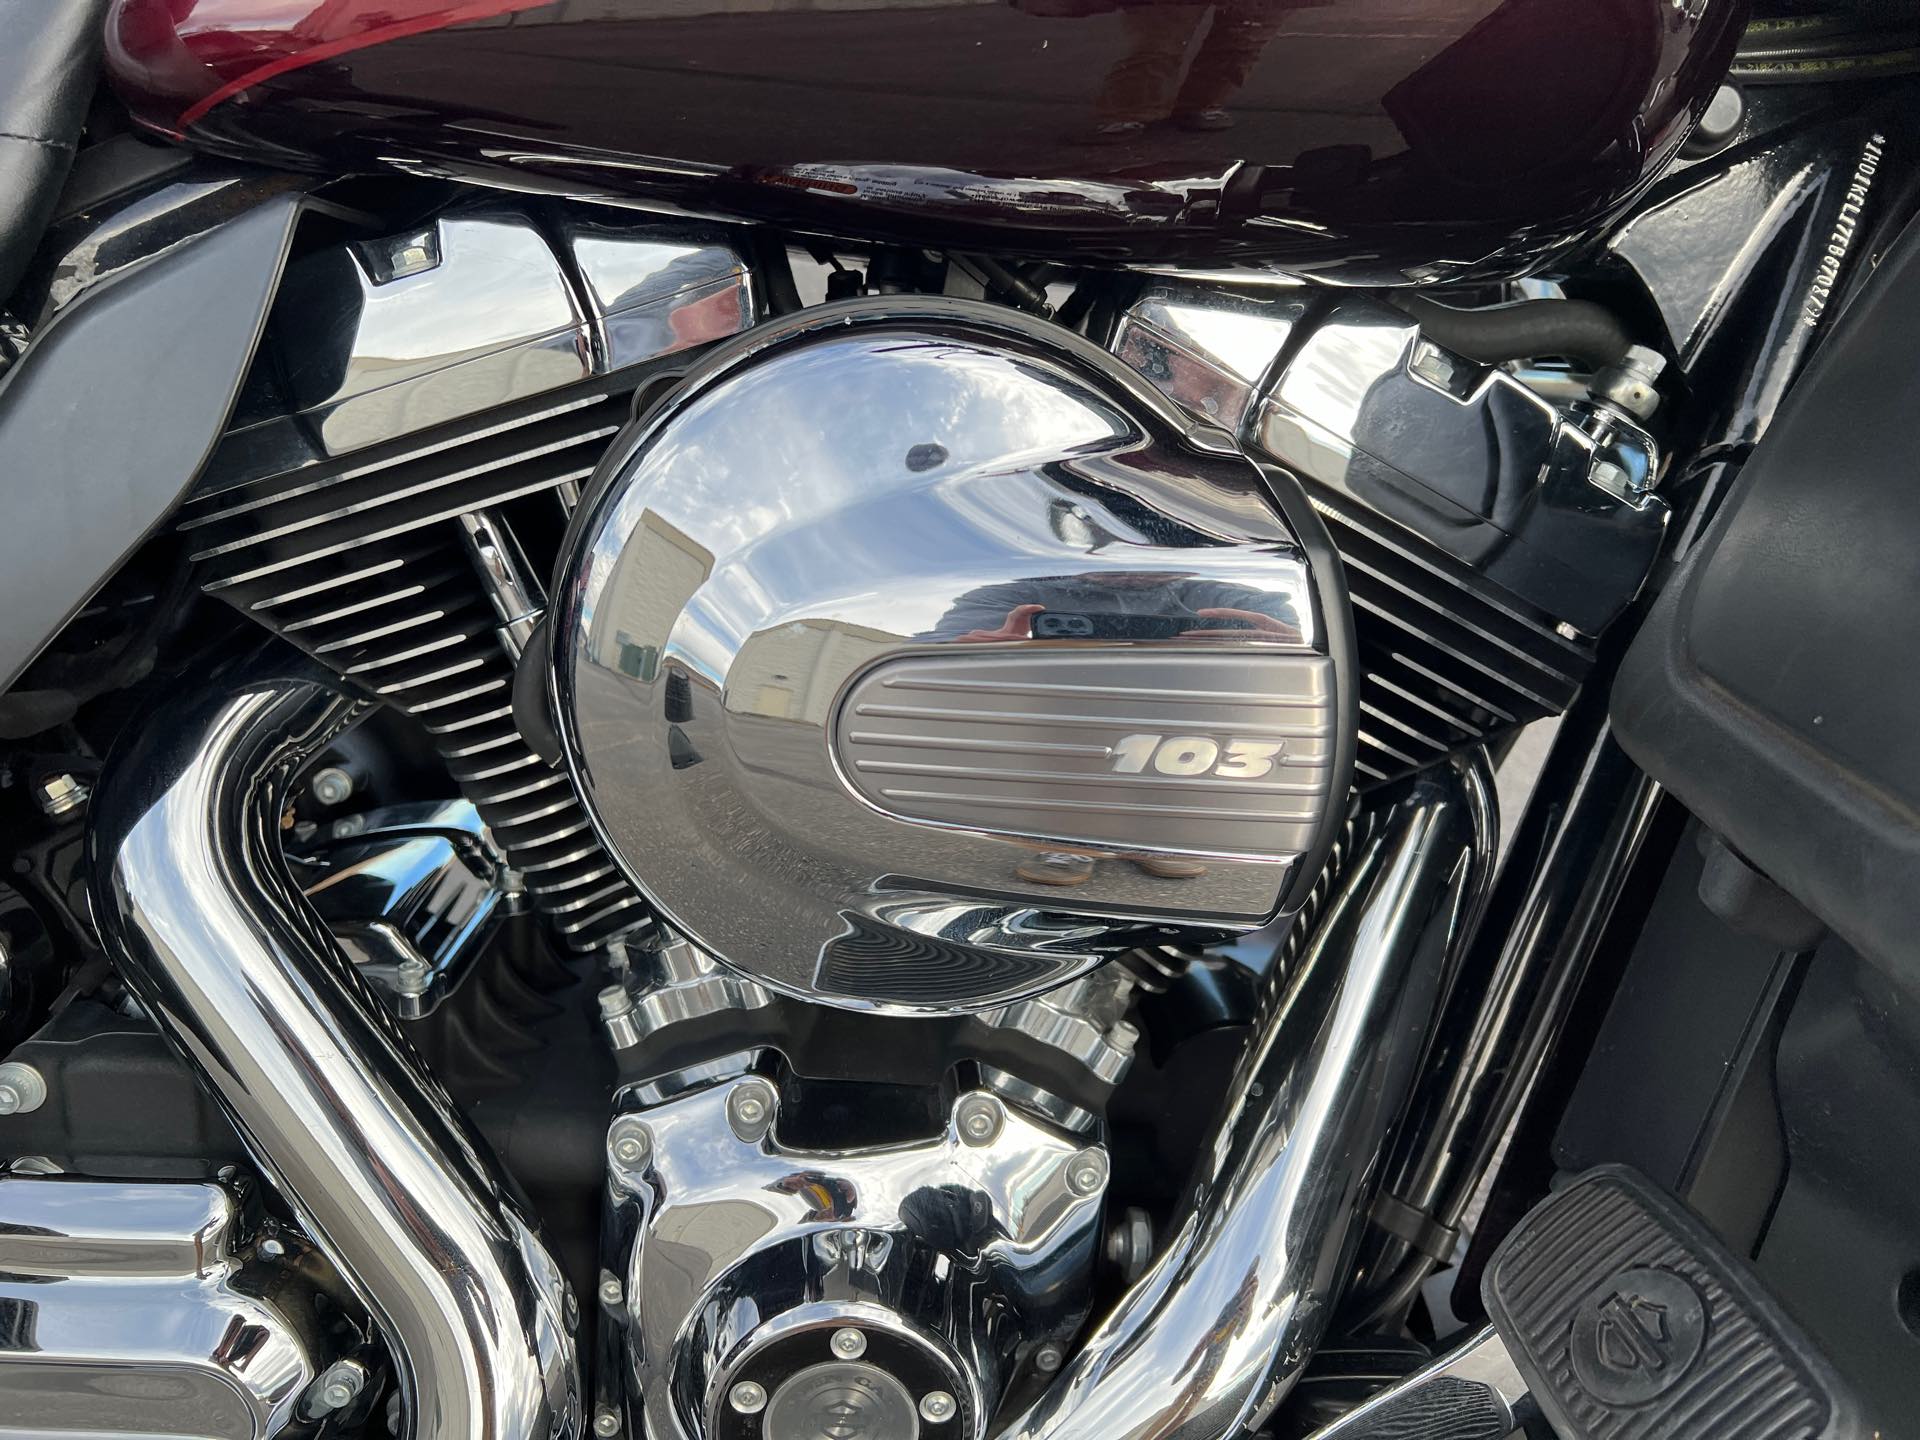 2014 Harley-Davidson Electra Glide Ultra Limited at Mount Rushmore Motorsports